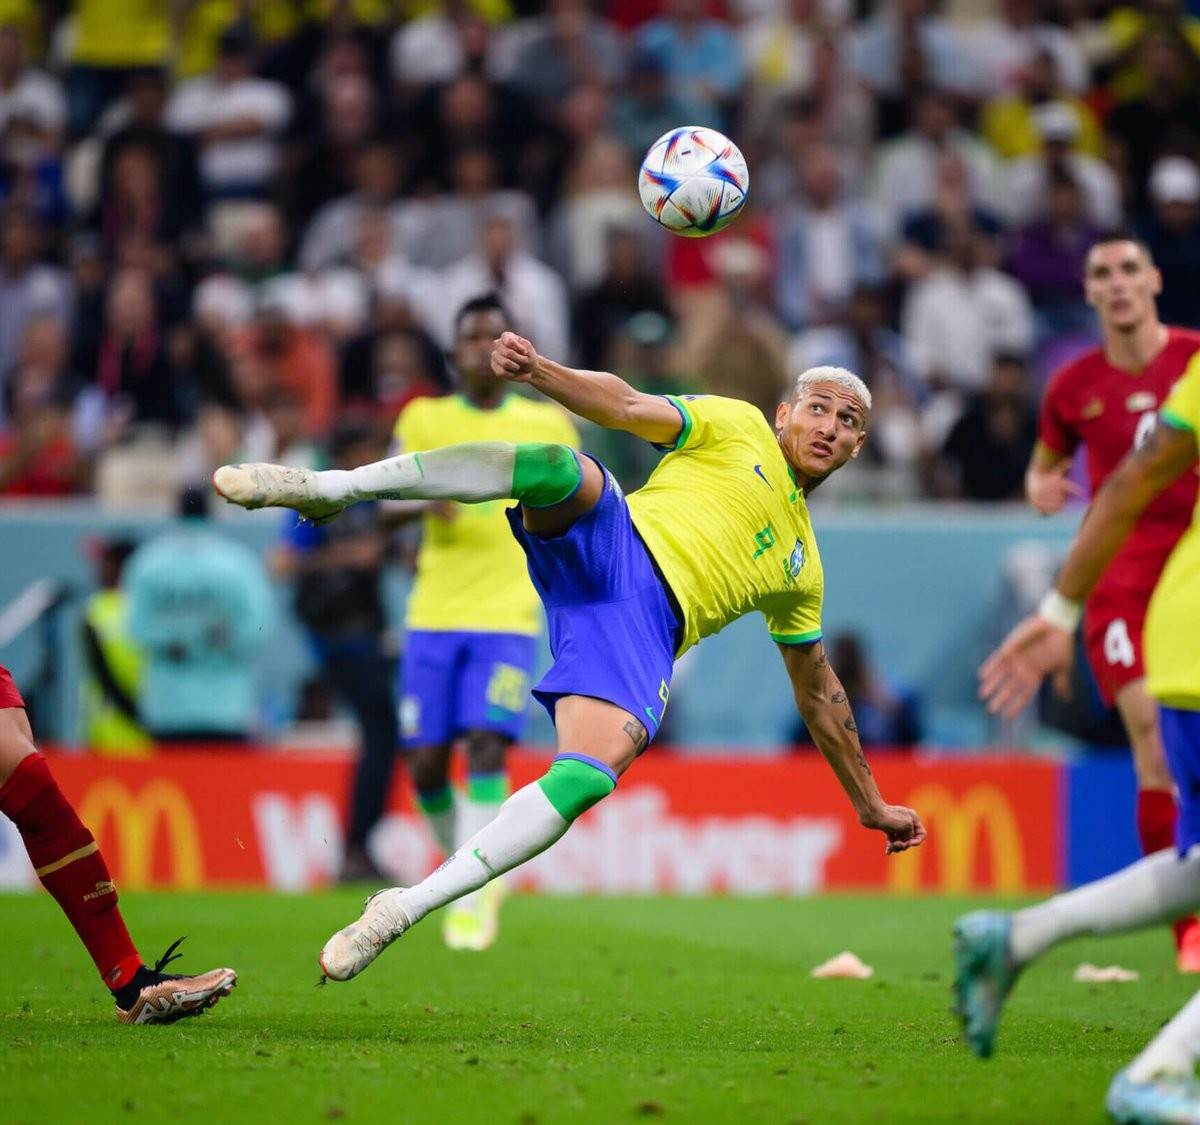 Brazil's Richarlison Discloses Depression Battle Post-World Cup 2022 Exit